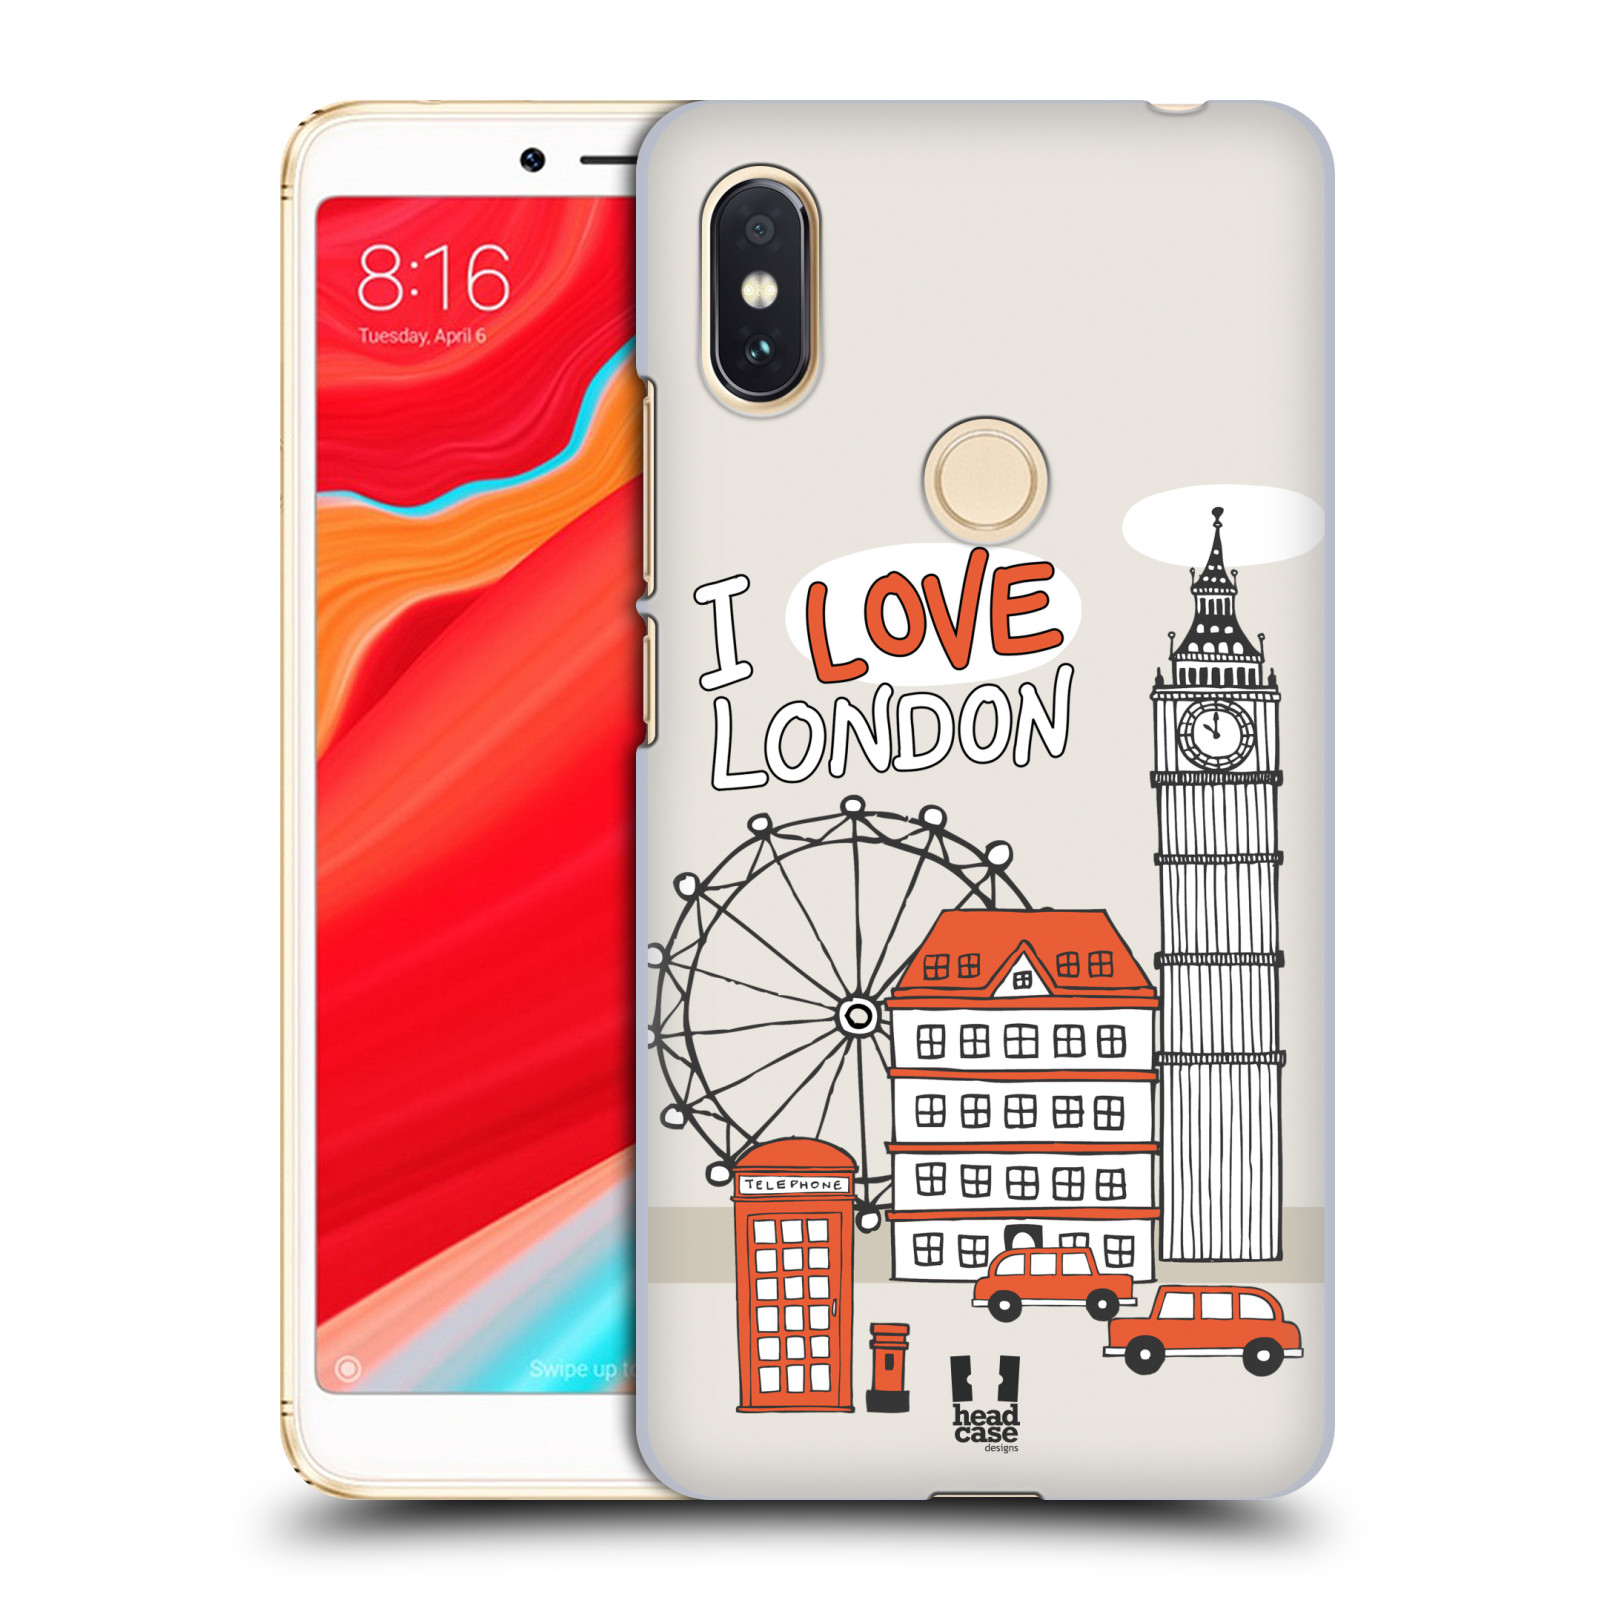 HEAD CASE plastový obal na mobil Xiaomi Redmi S2 vzor Kreslená městečka ČERVENÁ, Anglie, Londýn, I LOVE LONDON